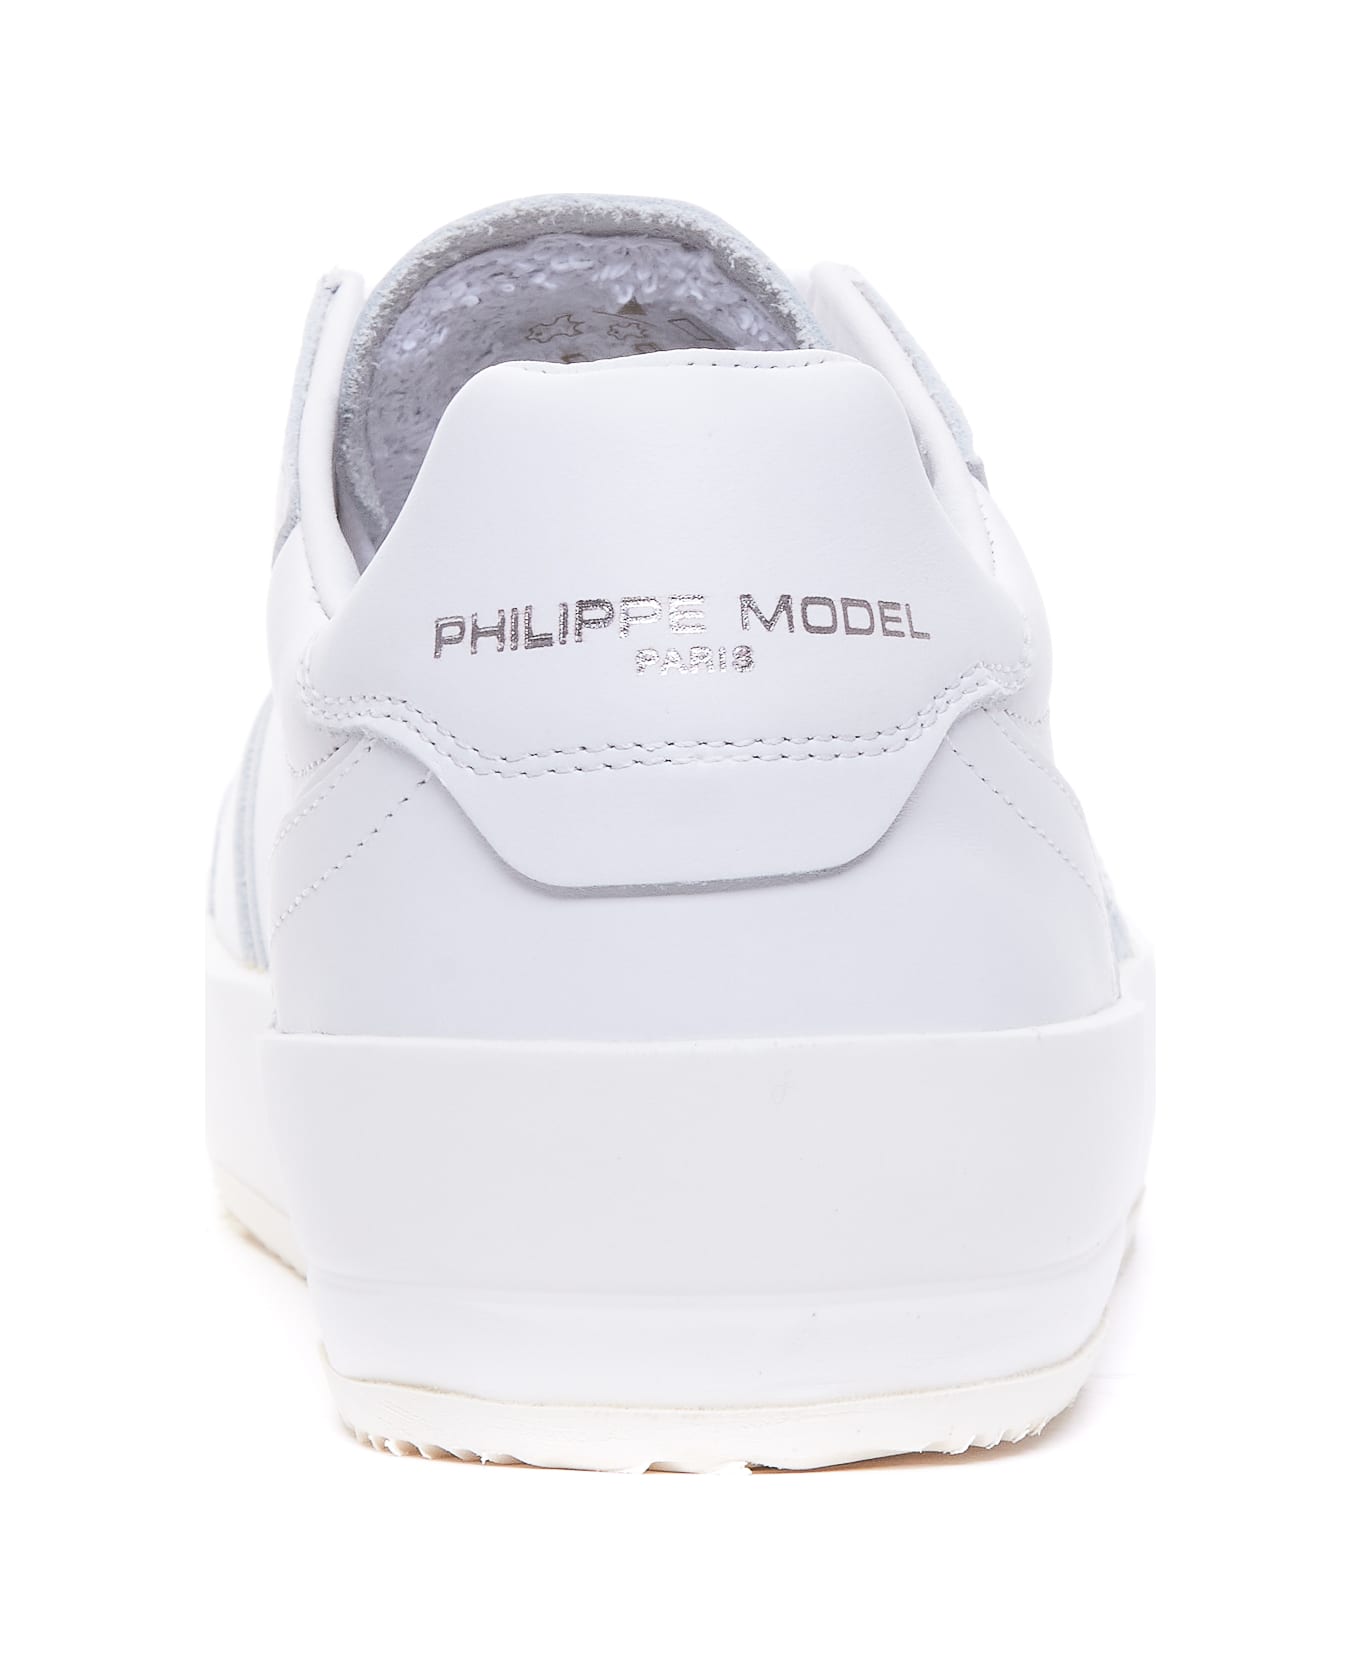 Philippe Model Nice Low Sneakers - Veau Blanc